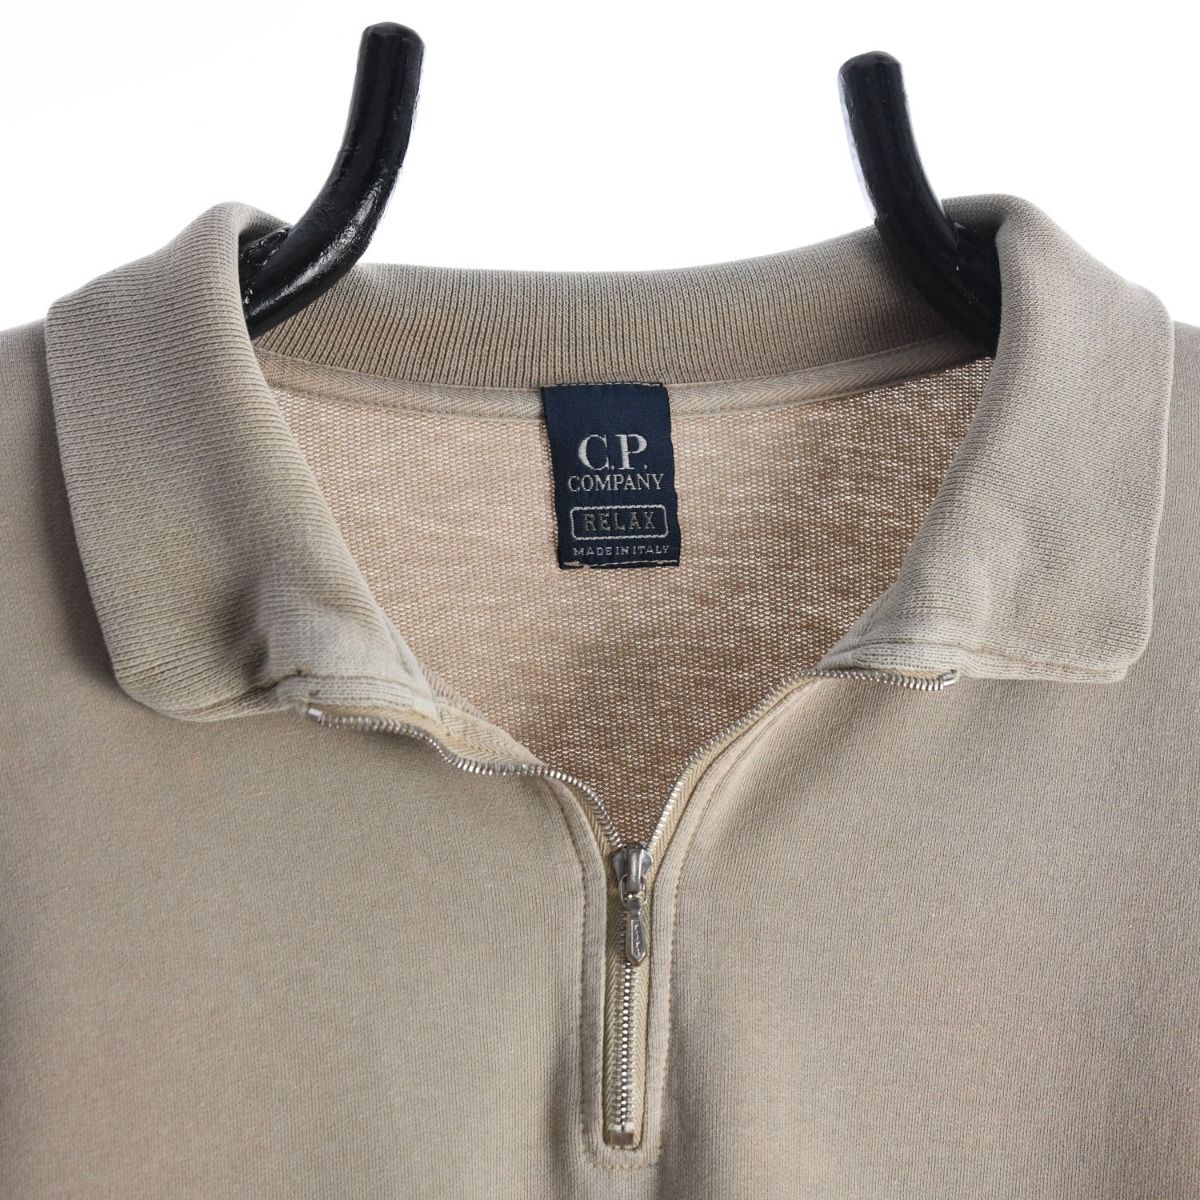 CP Company Relax SS 1997 Sweatshirt